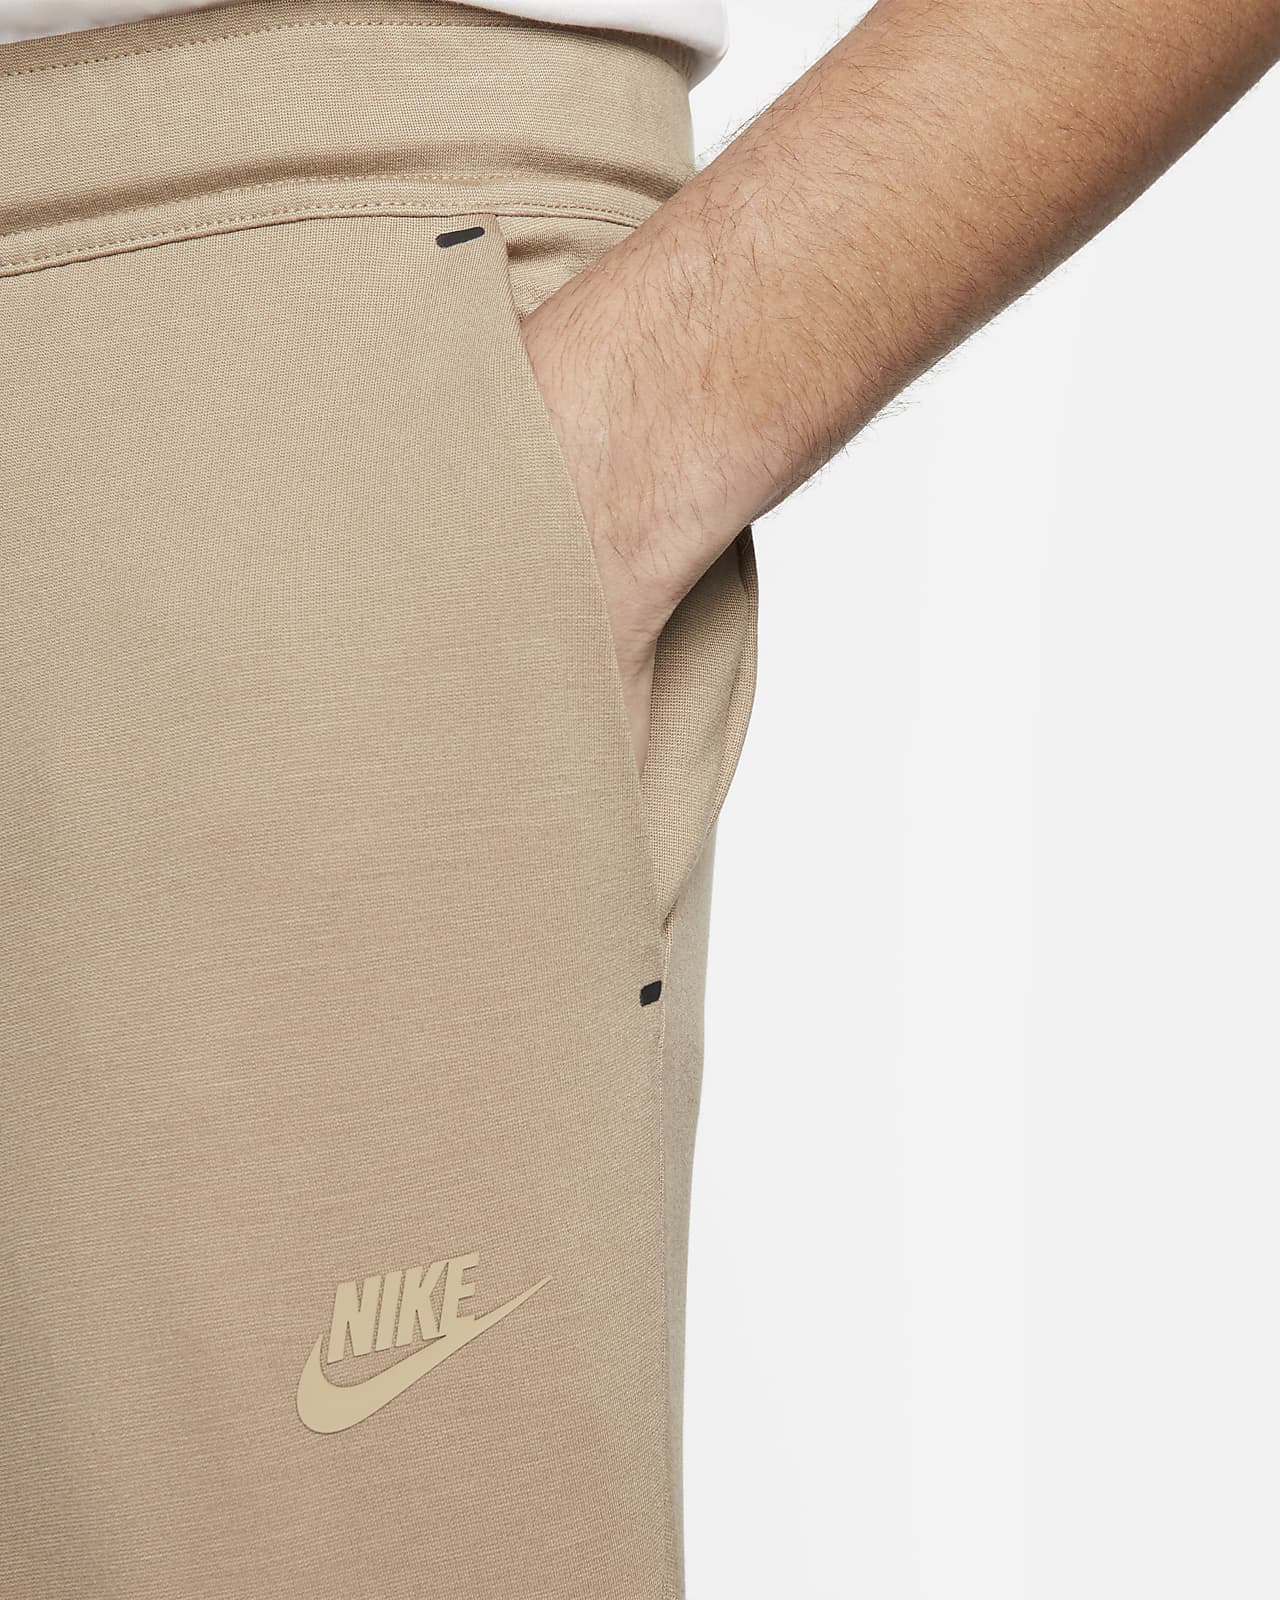 schuur Onderling verbinden Bemiddelen Nike Sportswear Tech Fleece Lightweight Men's Slim-Fit Jogger Sweatpants.  Nike.com